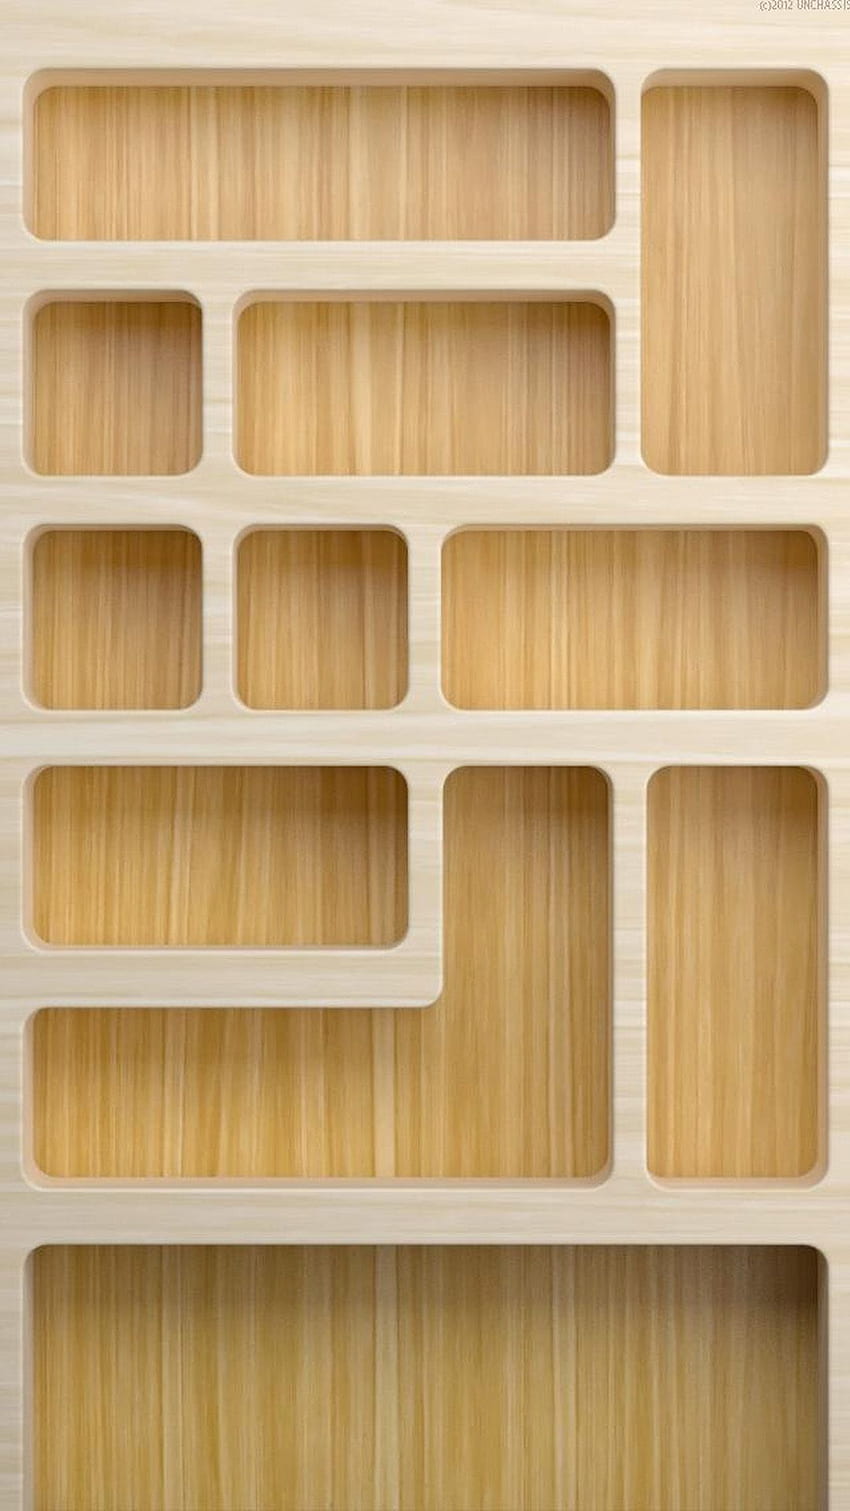 Iphone Wooden Shelf Wallpaper by bastian1967 on DeviantArt